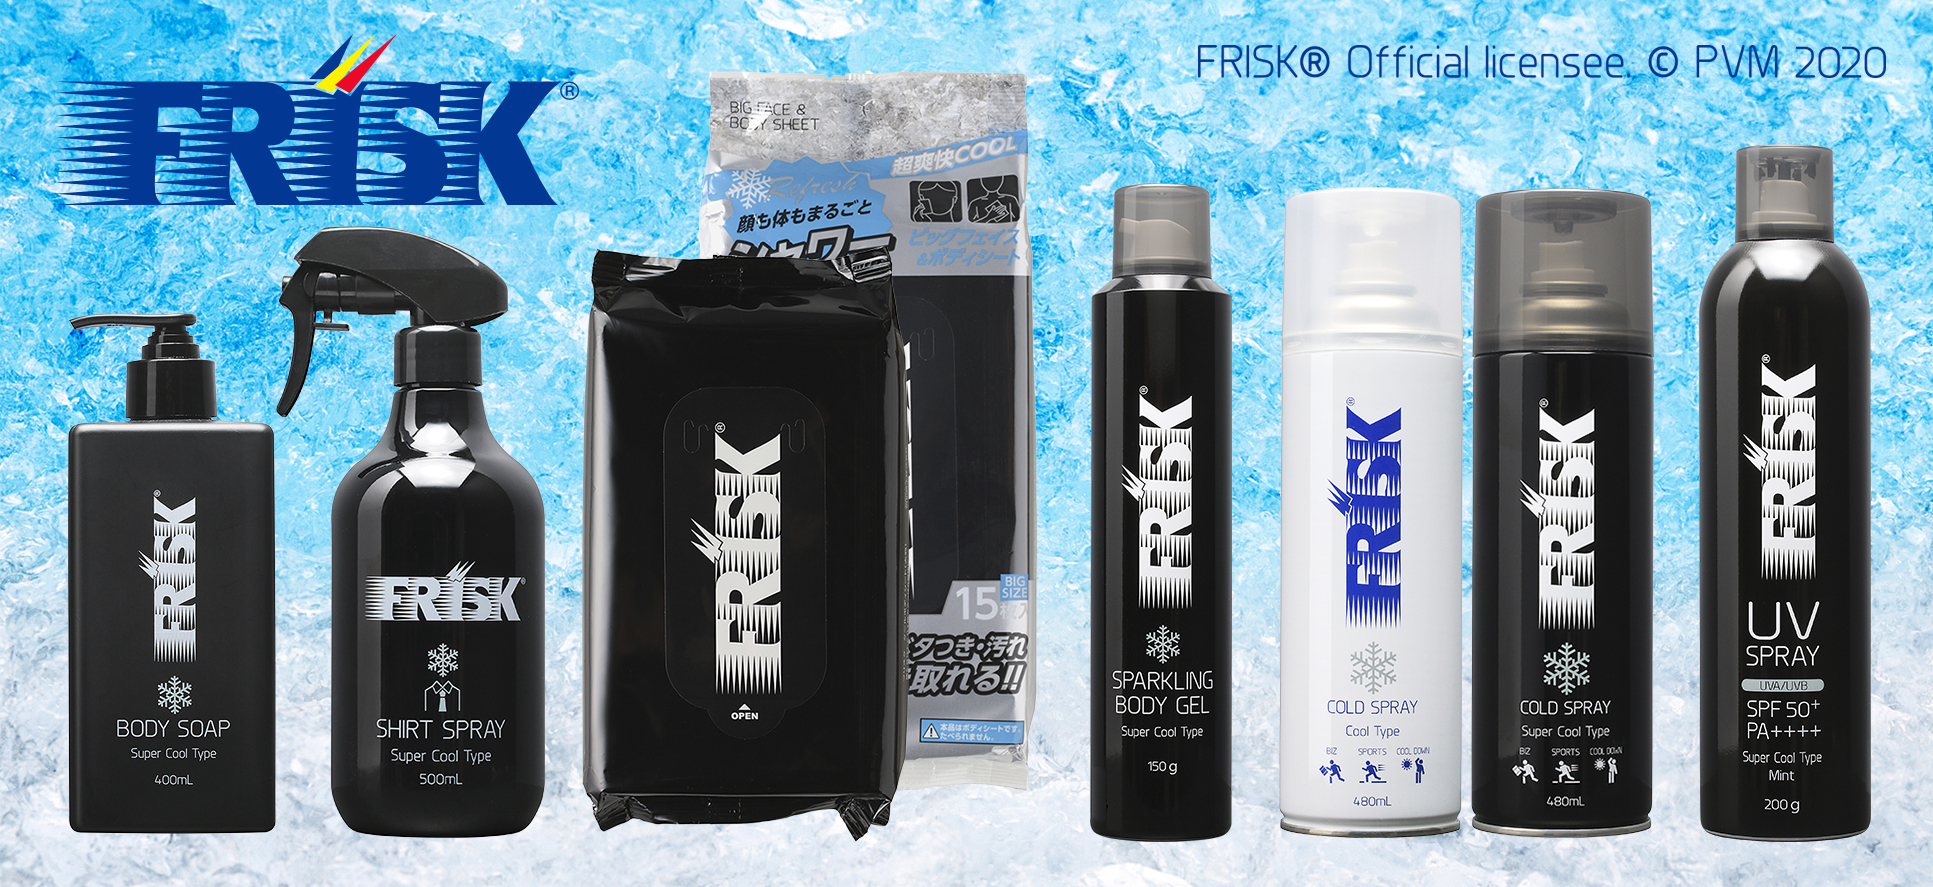 Frisk フリスク を全身で体感せよ 即効リフレッシュできる冷感アイテムが新登場 株式会社ドウシシャのプレスリリース